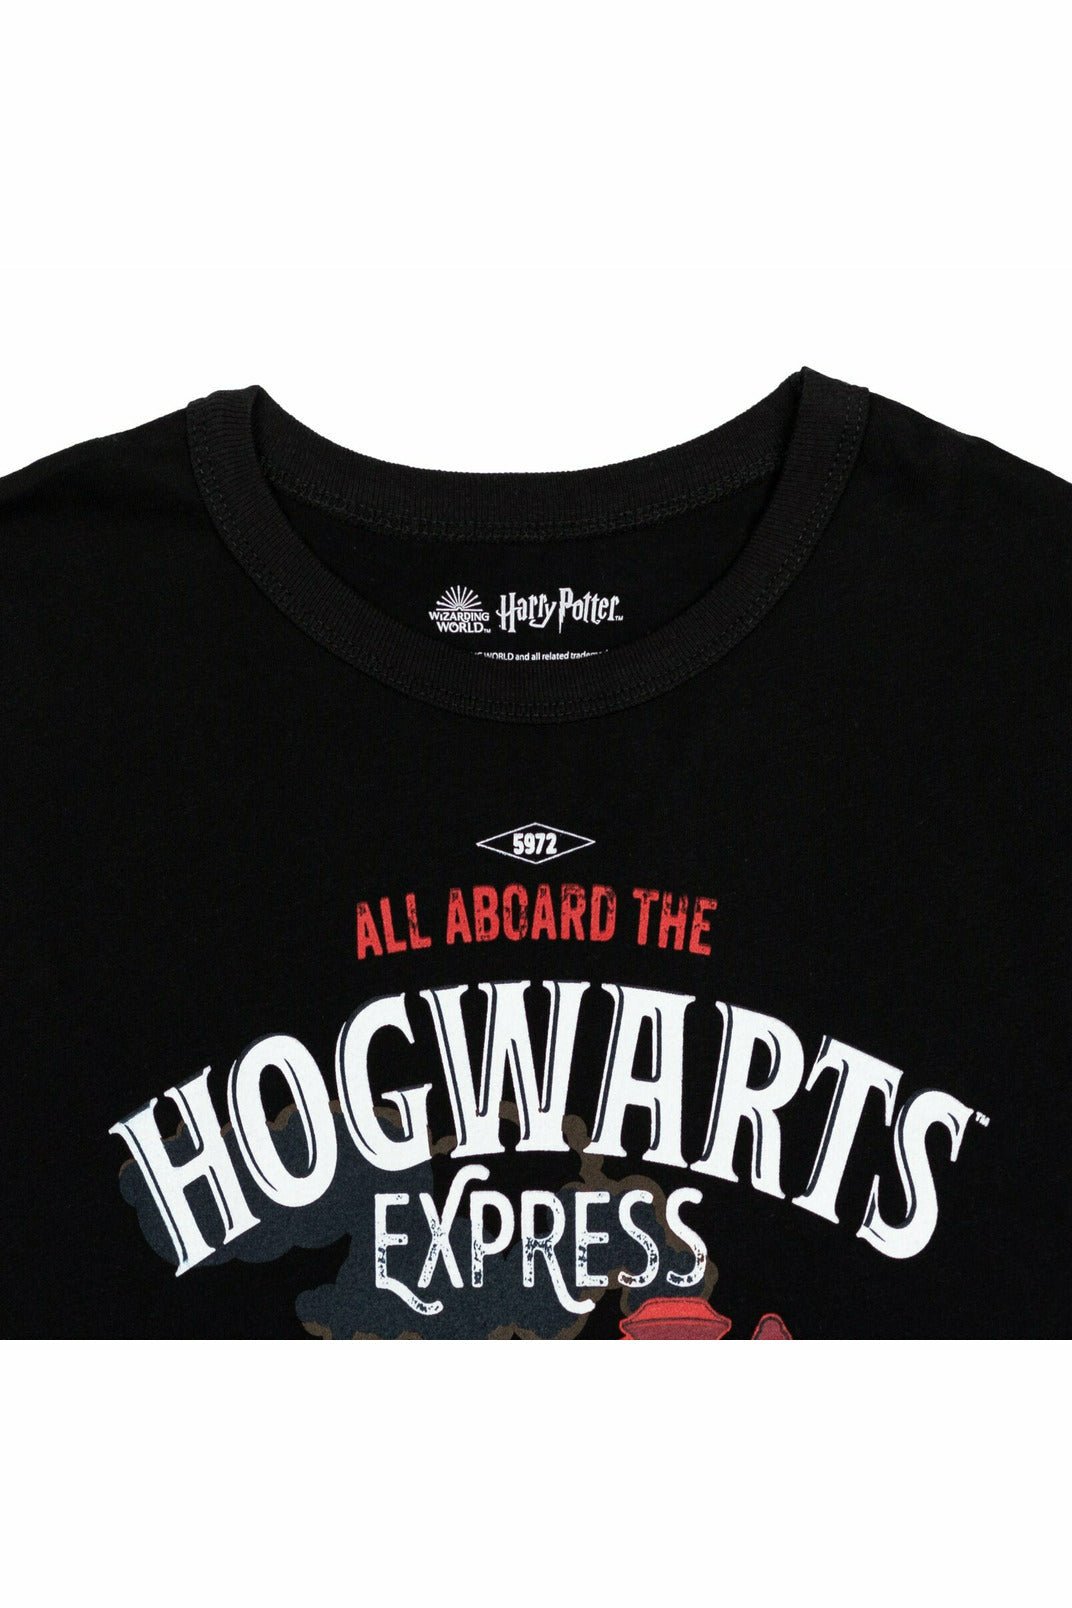 Harry Potter Hogwarts 2 Pack Long Sleeve Graphic T-Shirts - imagikids